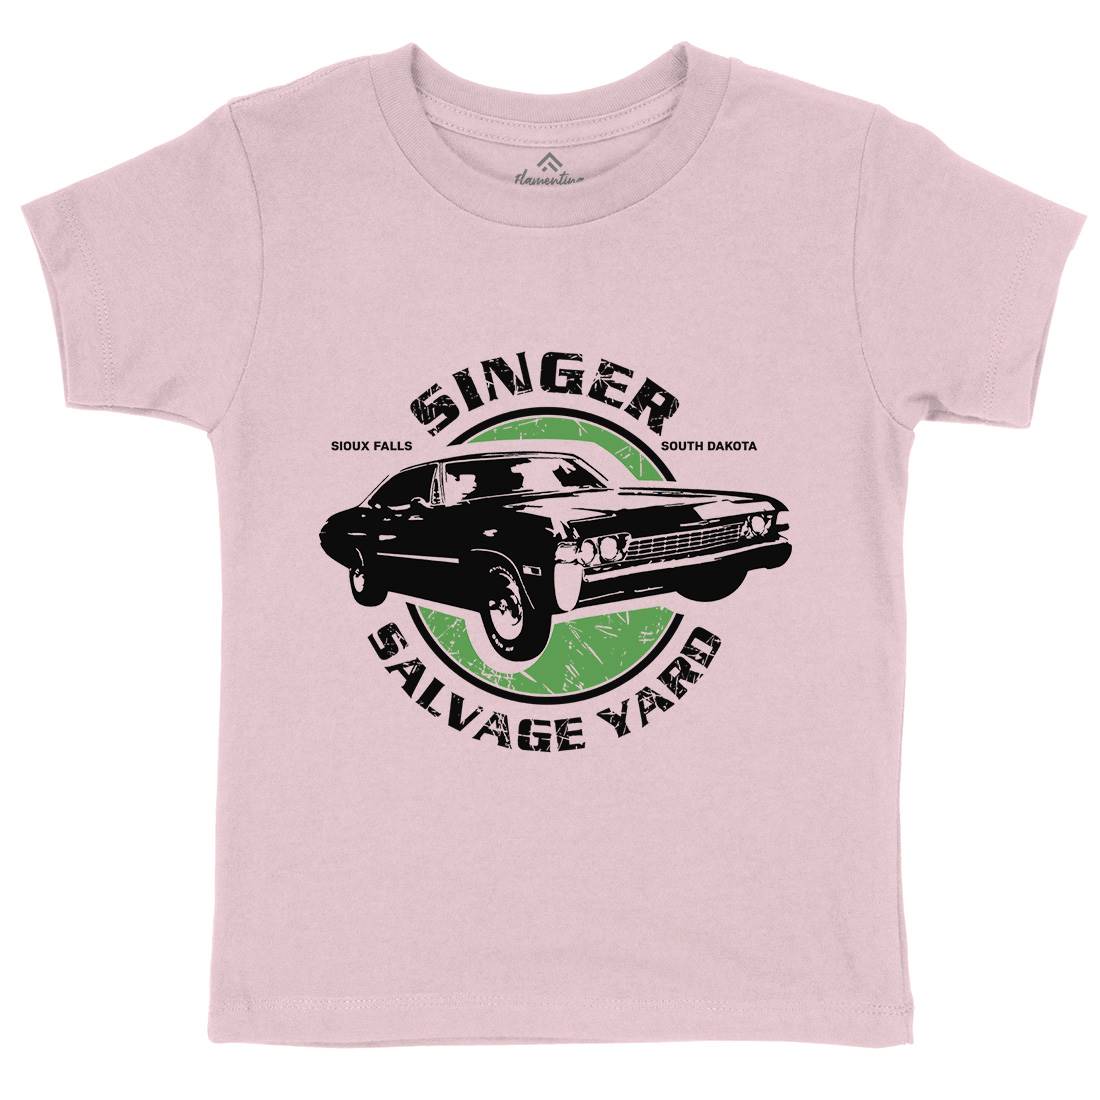 Singer Salvage Yard Kids Crew Neck T-Shirt Cars D377